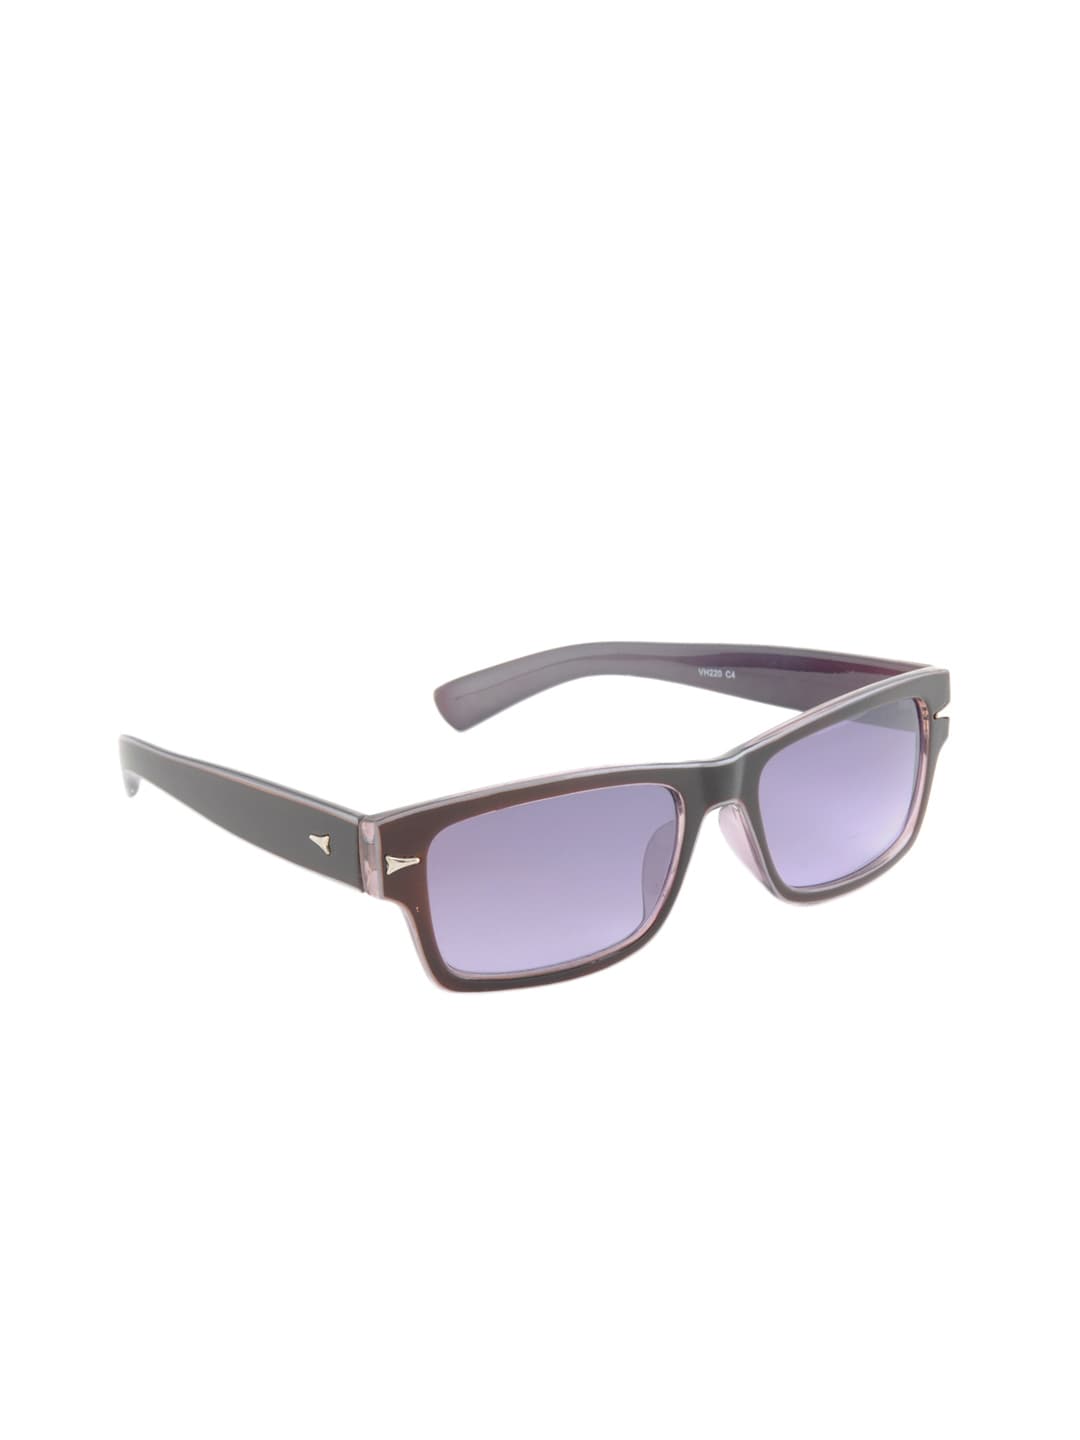 Van Heusen Unisex Purple Sunglasses